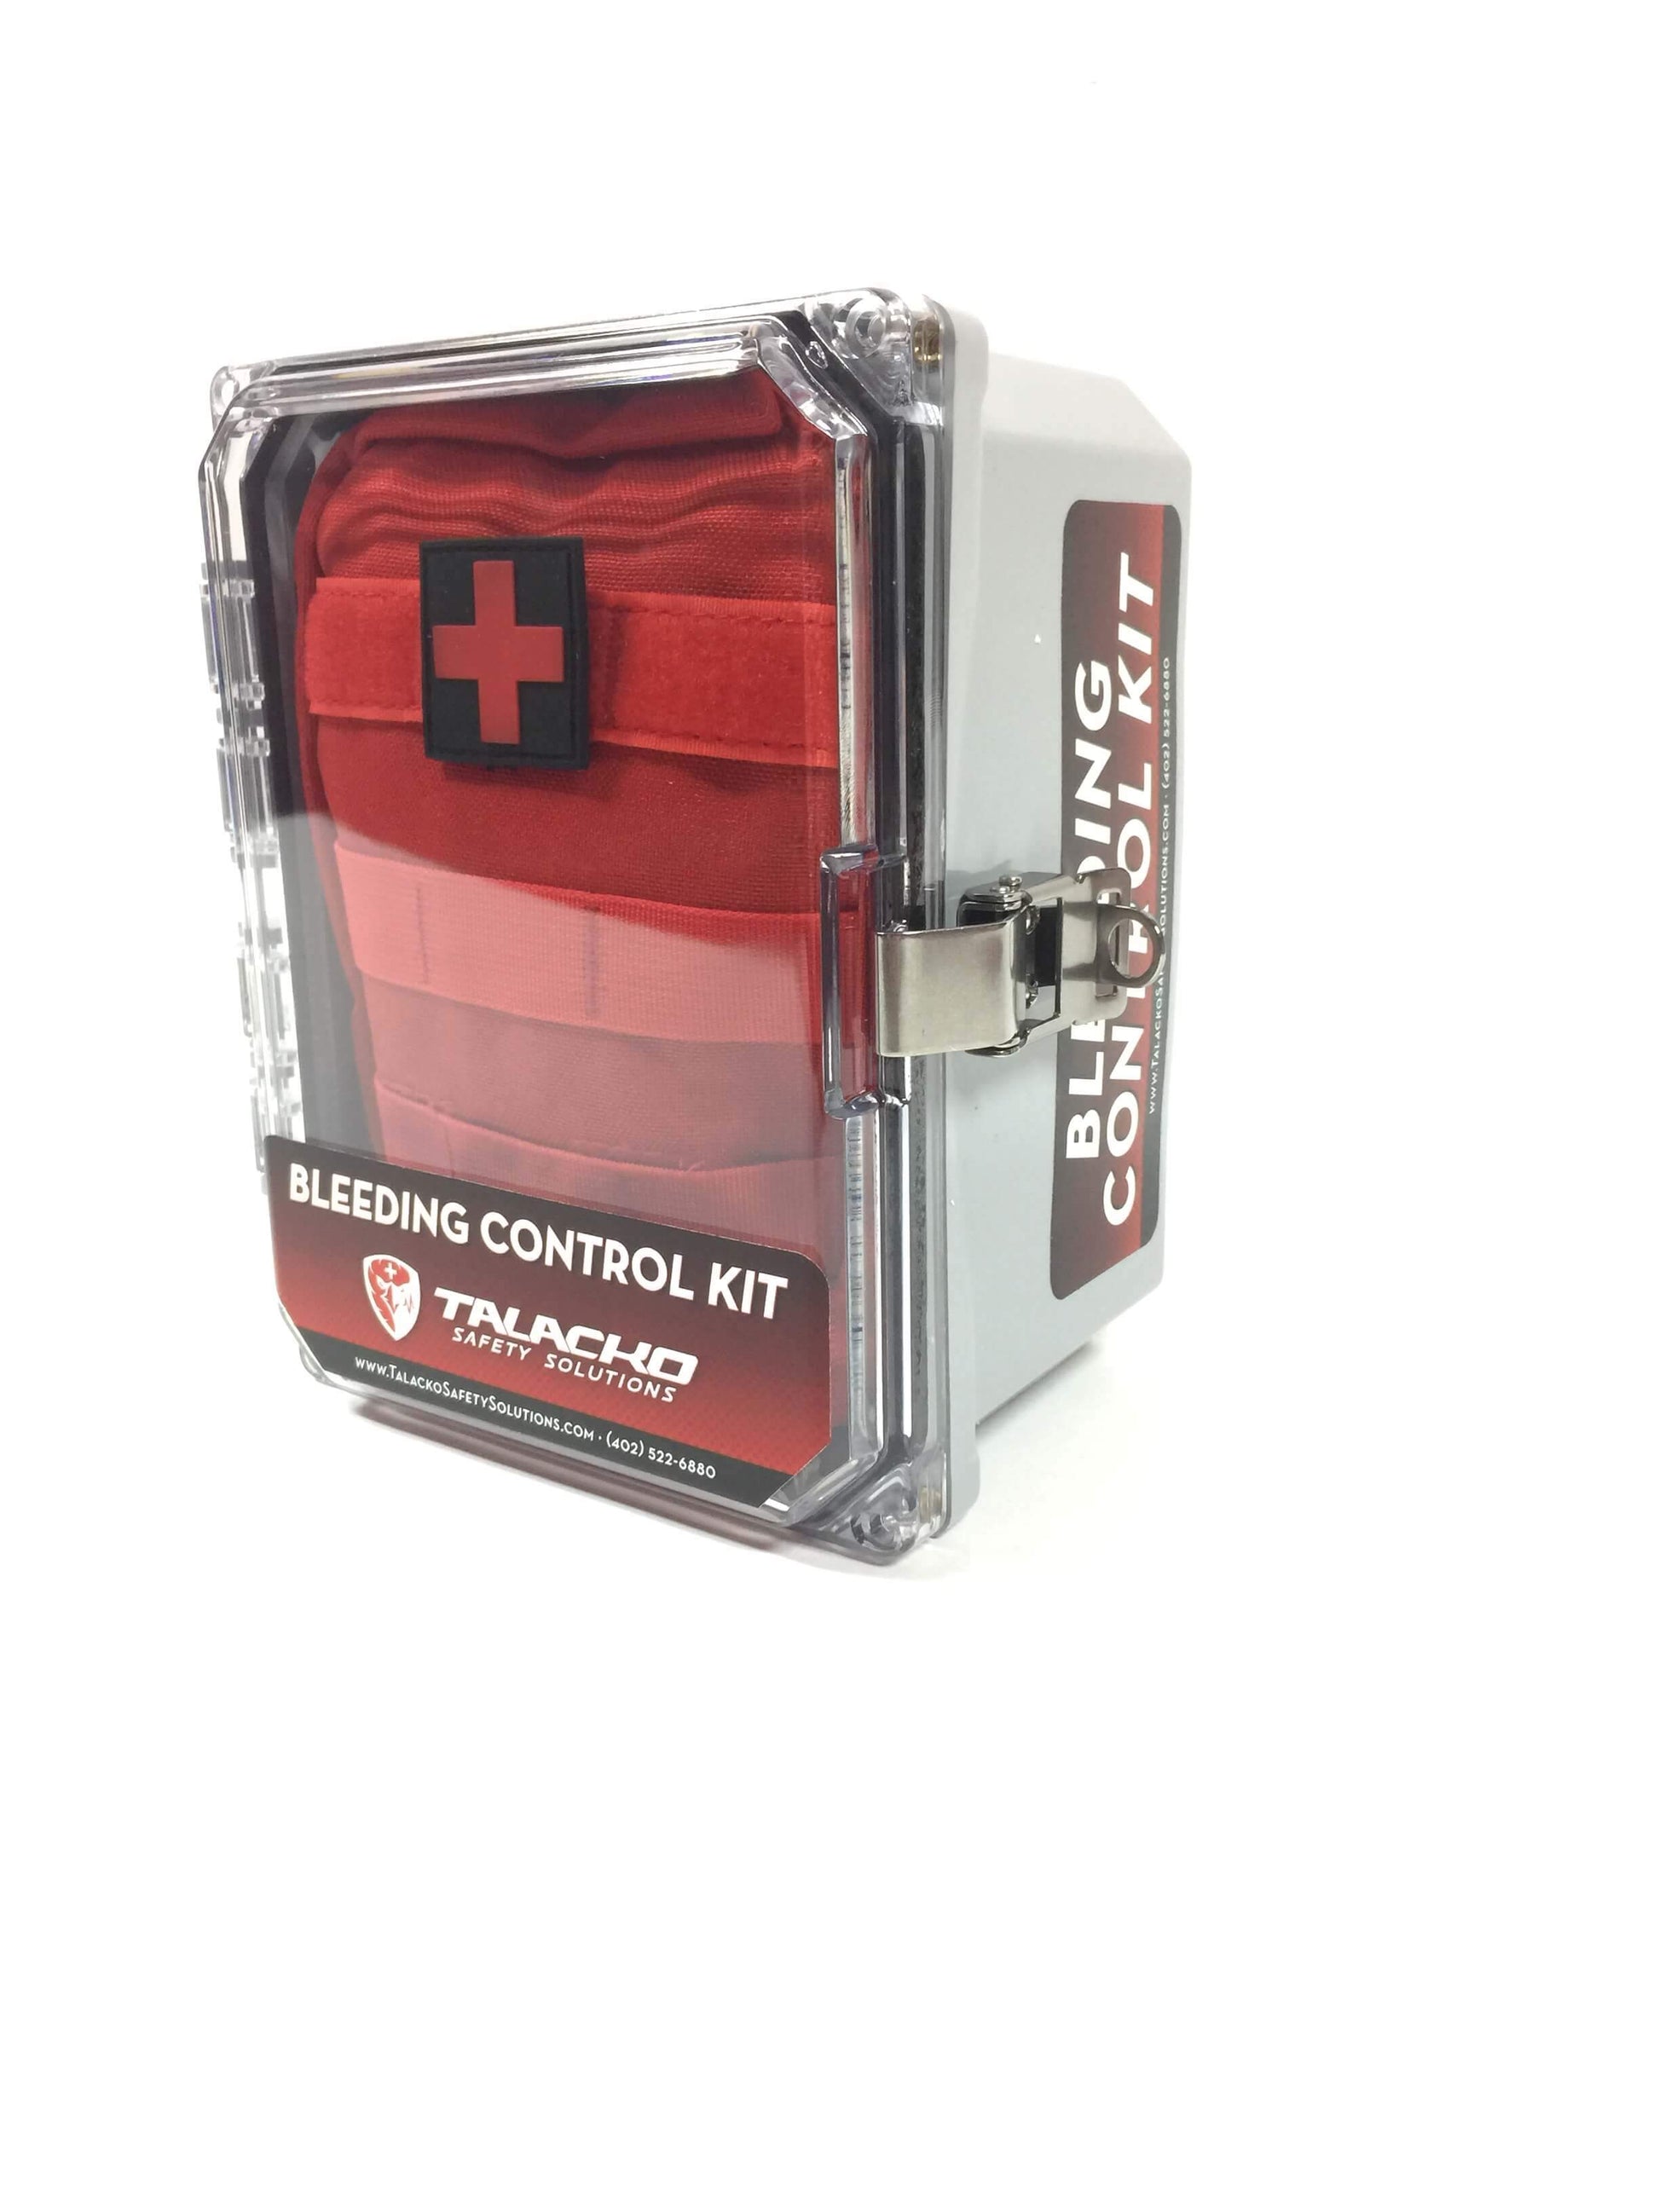 Basic Bleeding Control Kit in Nylon bag with 8x6x4 public access enclosure.